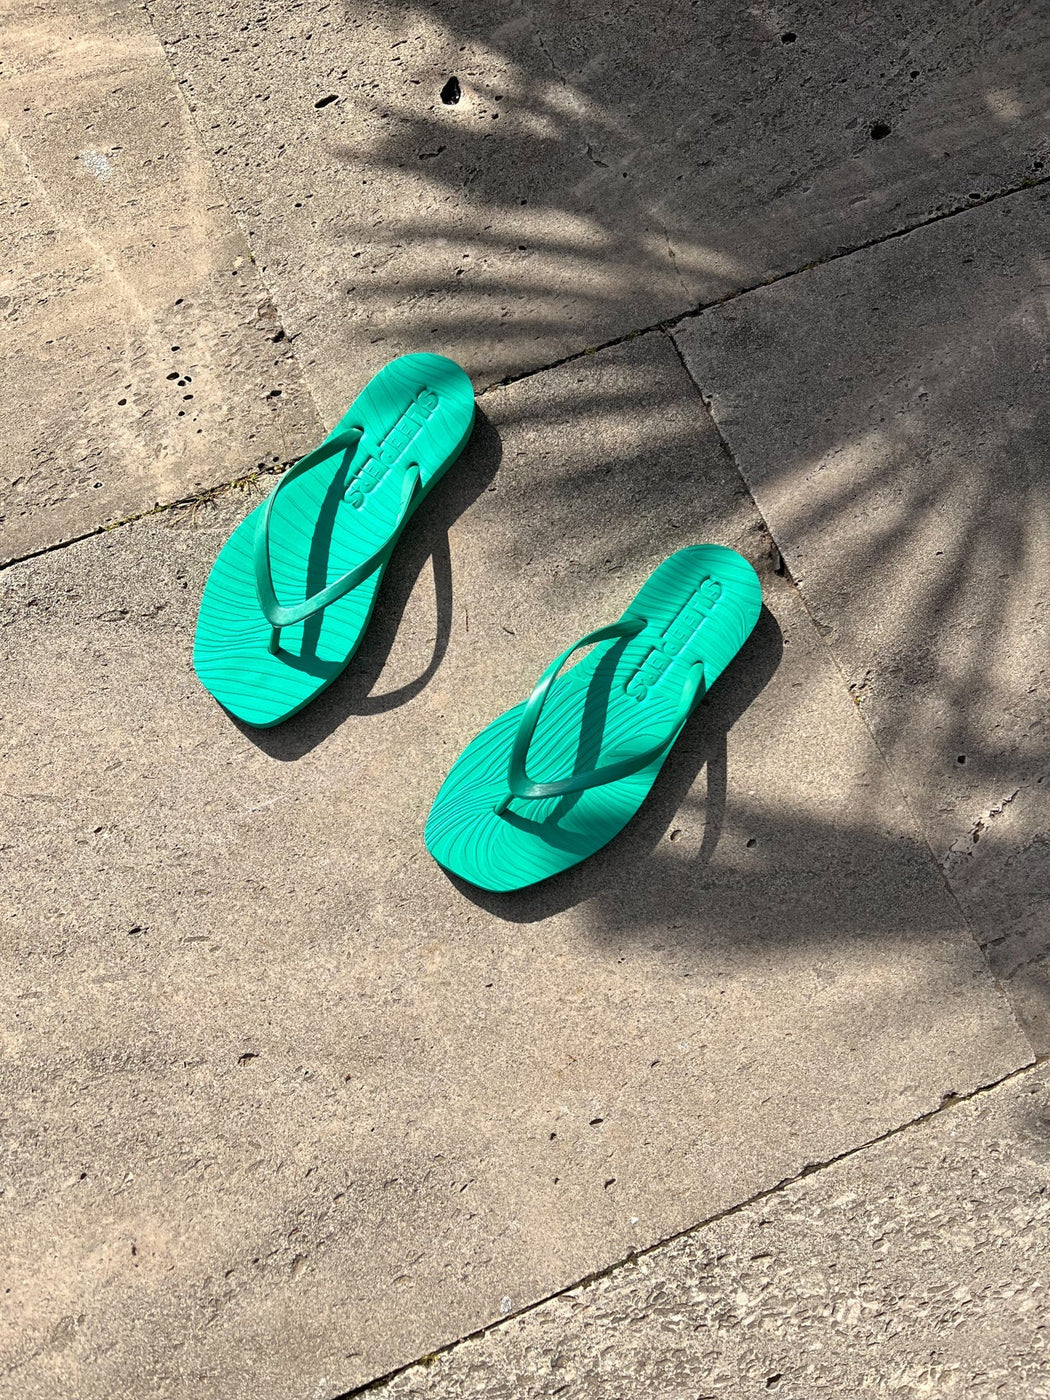 Sleepers Tapered Flip Flops - Emerald Green